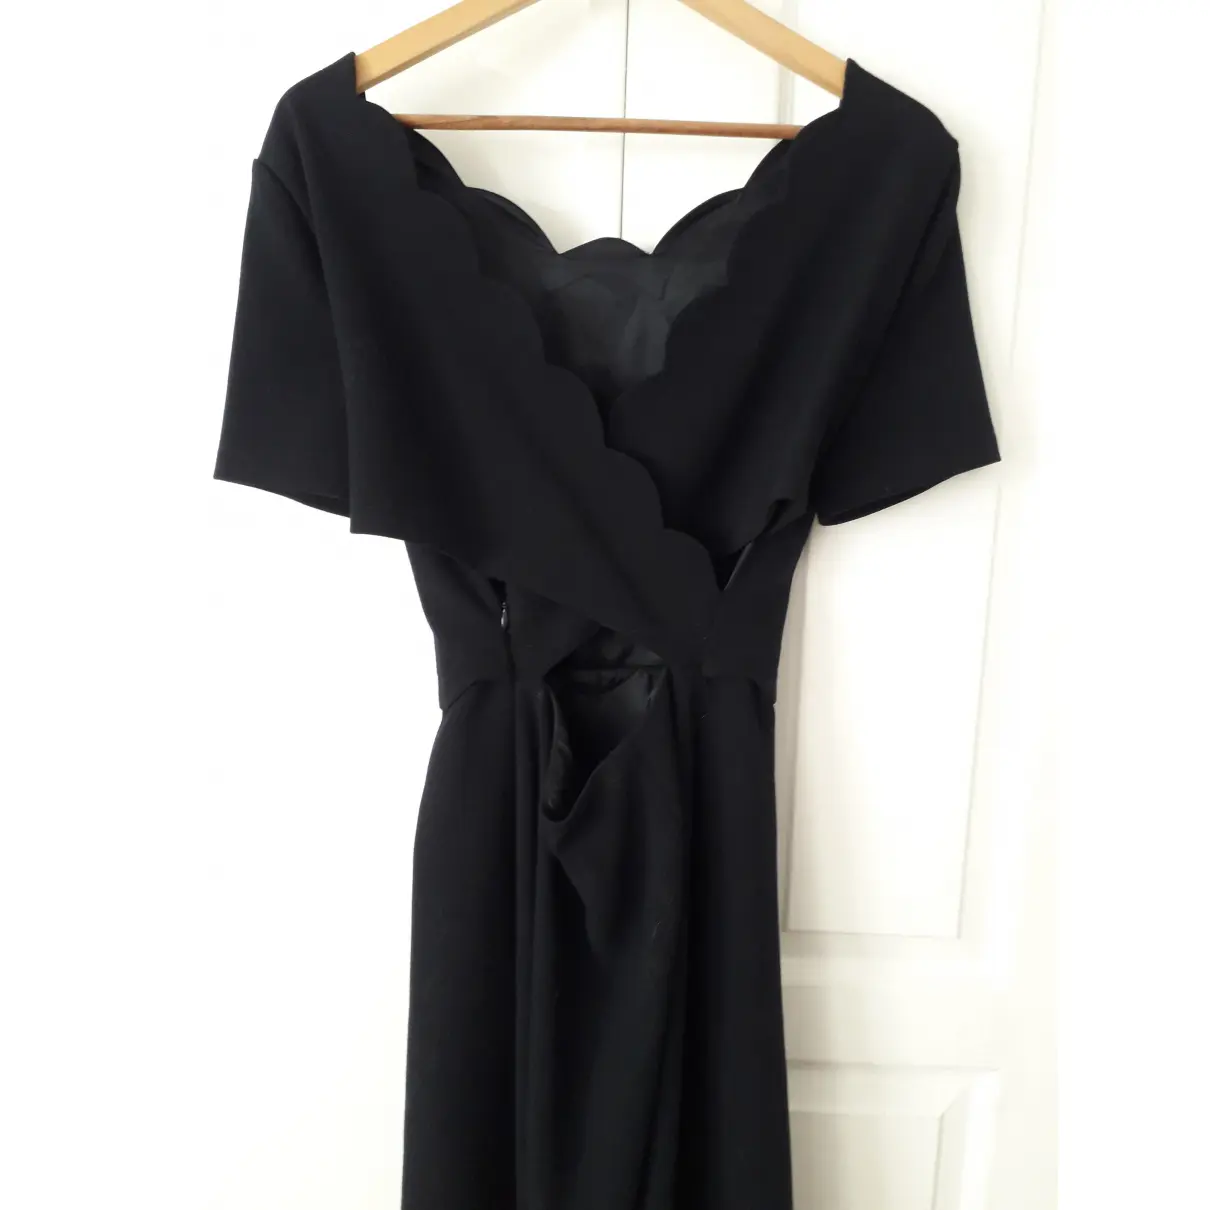 Buy Claudie Pierlot Fall Winter 2019 mid-length dress online